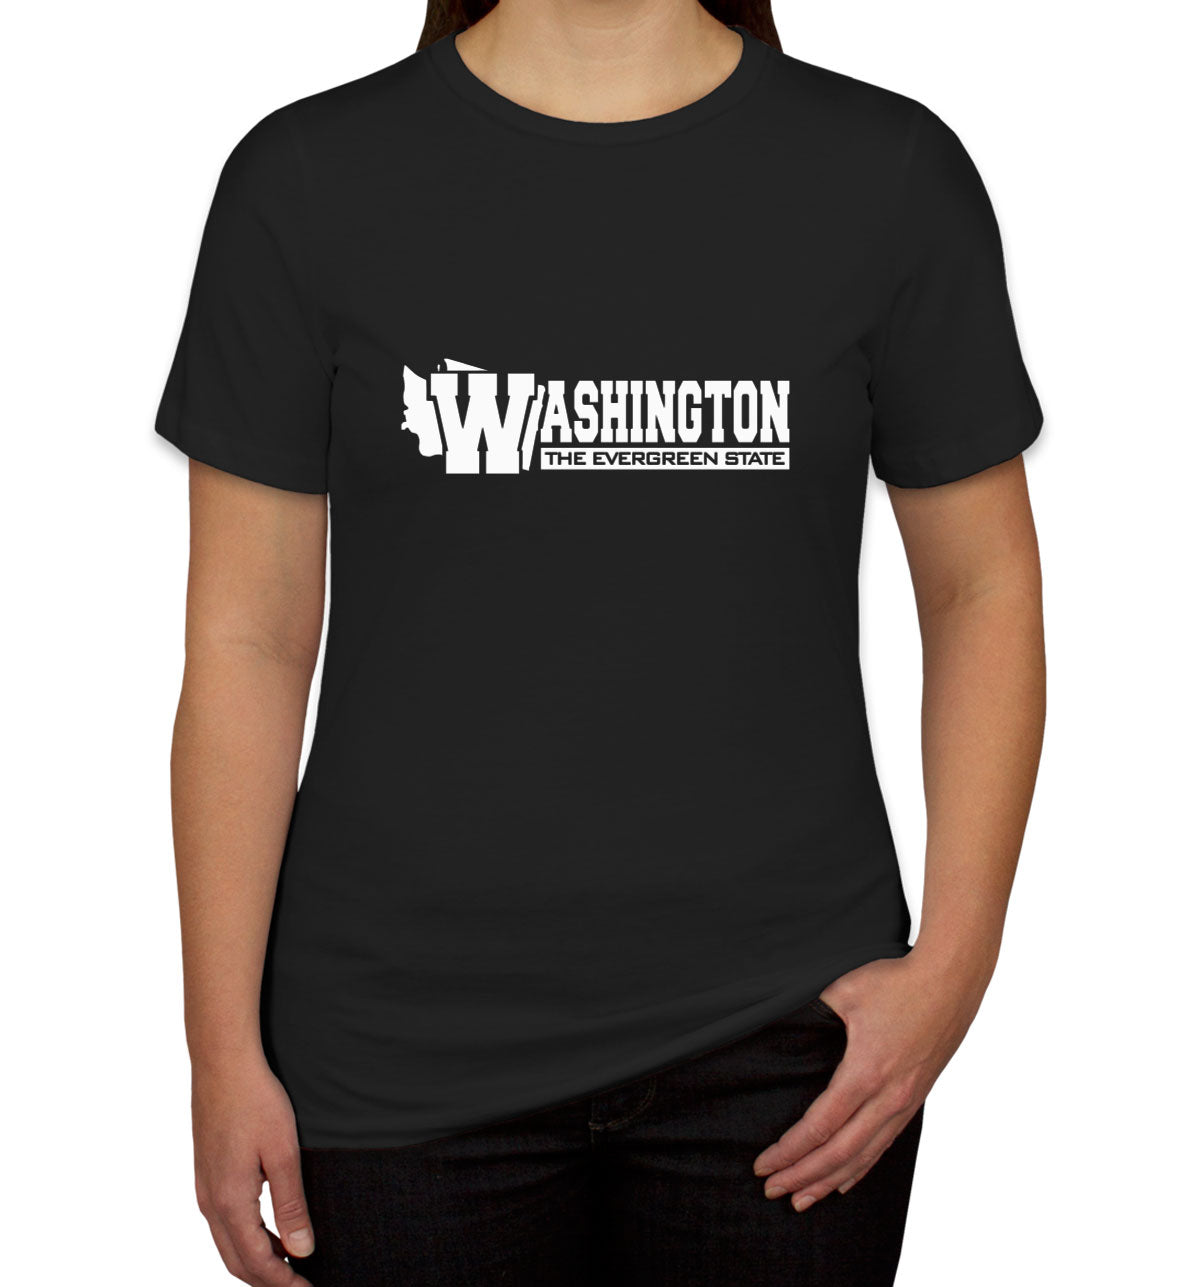 Washington The Evergreen State Women's T-shirt